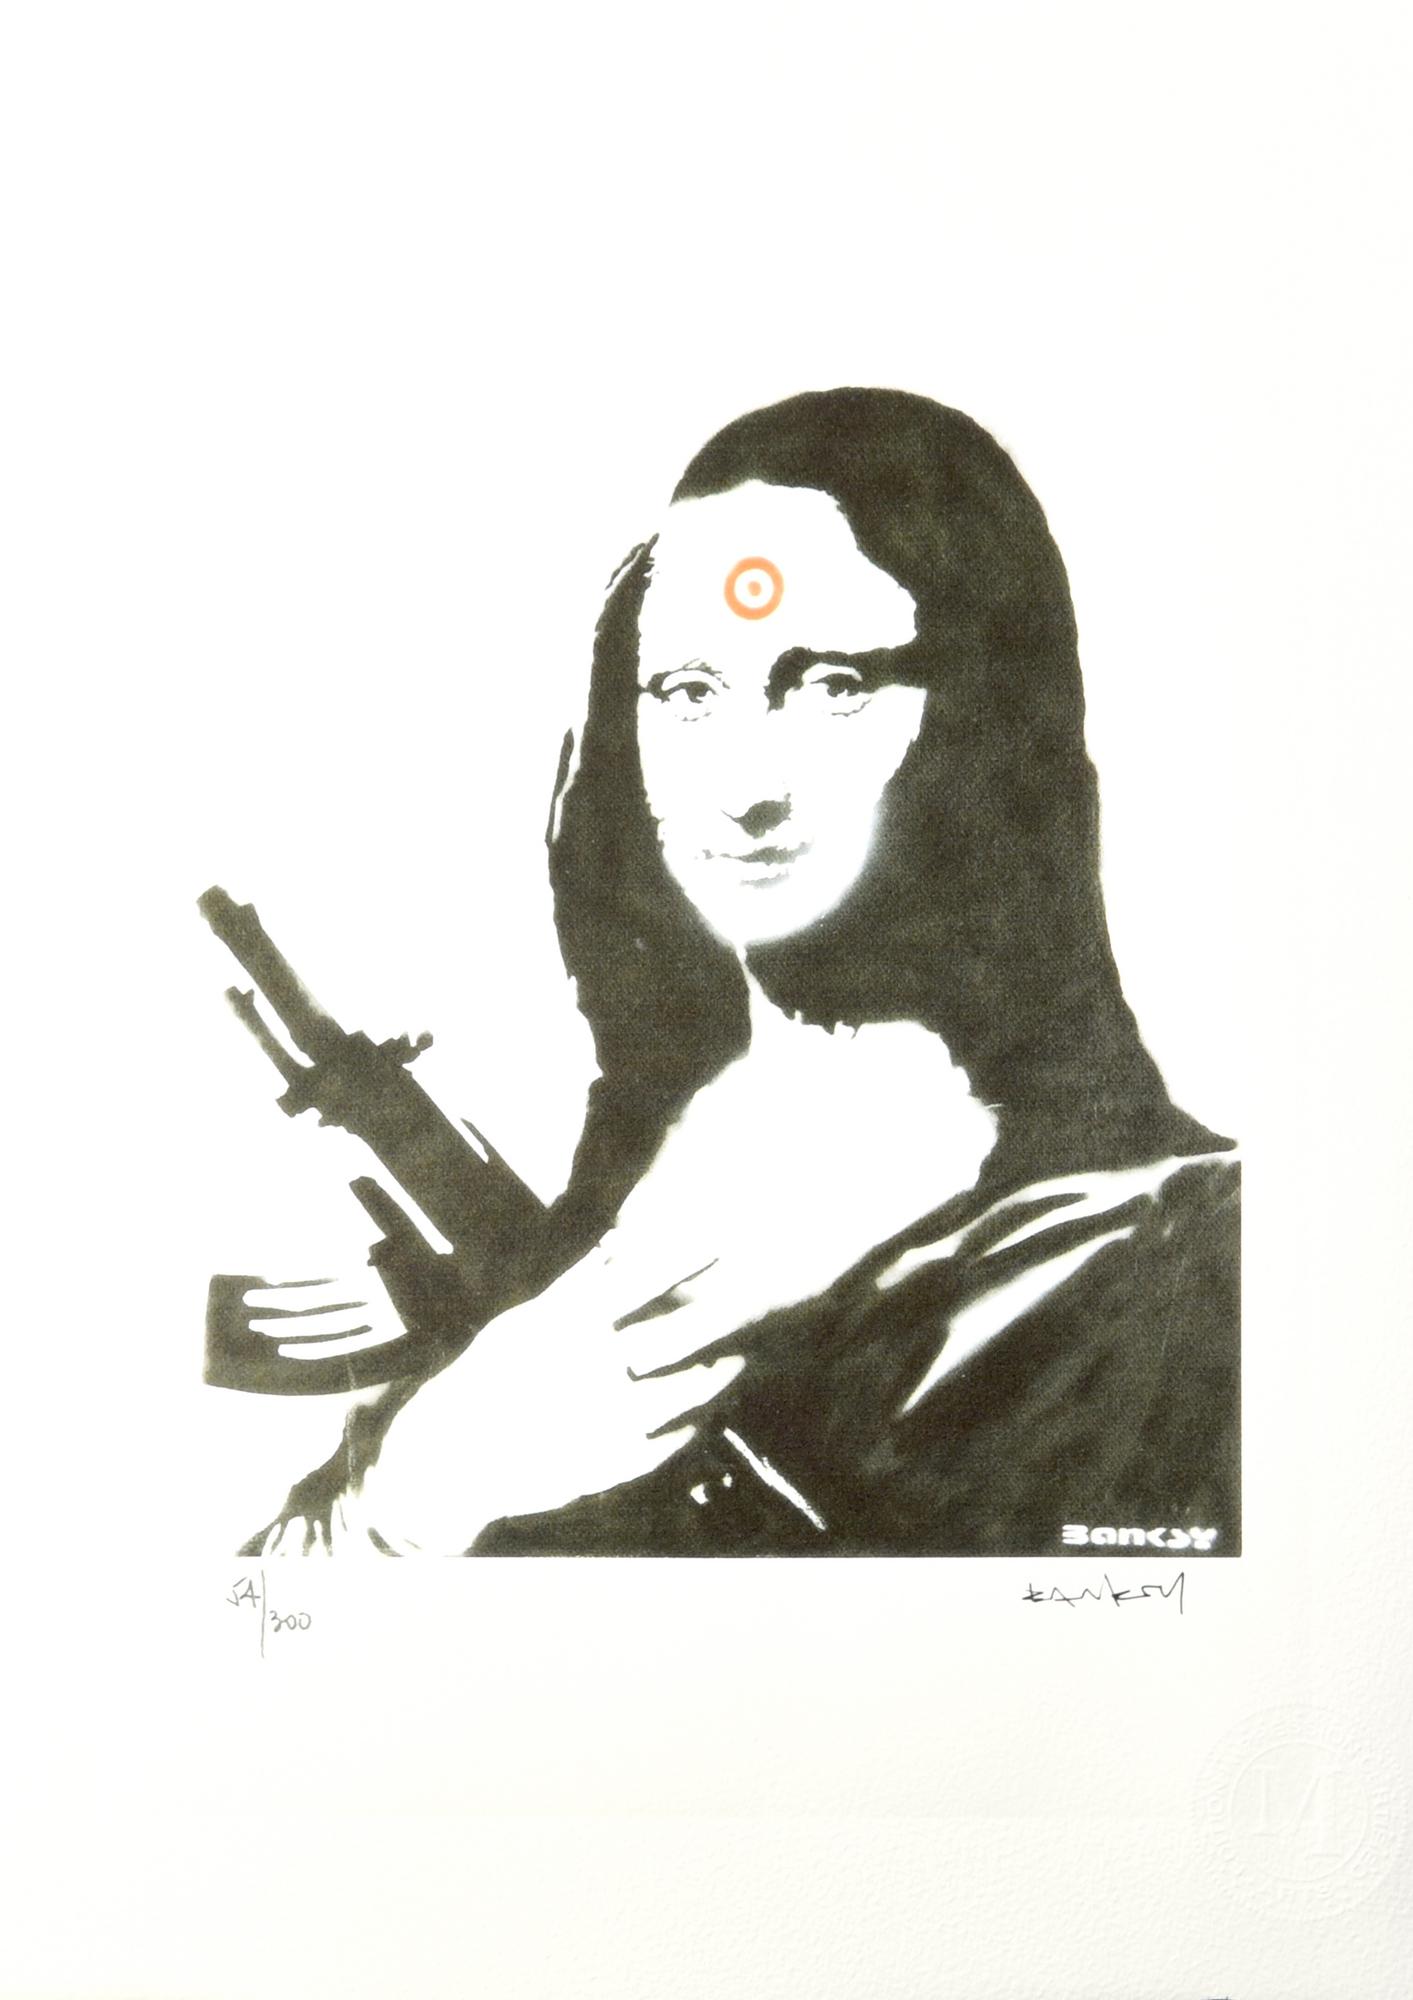 Da Banksy MONA LISA AK47 eliografia su carta Arches, cm 38x28; es. 54/300...